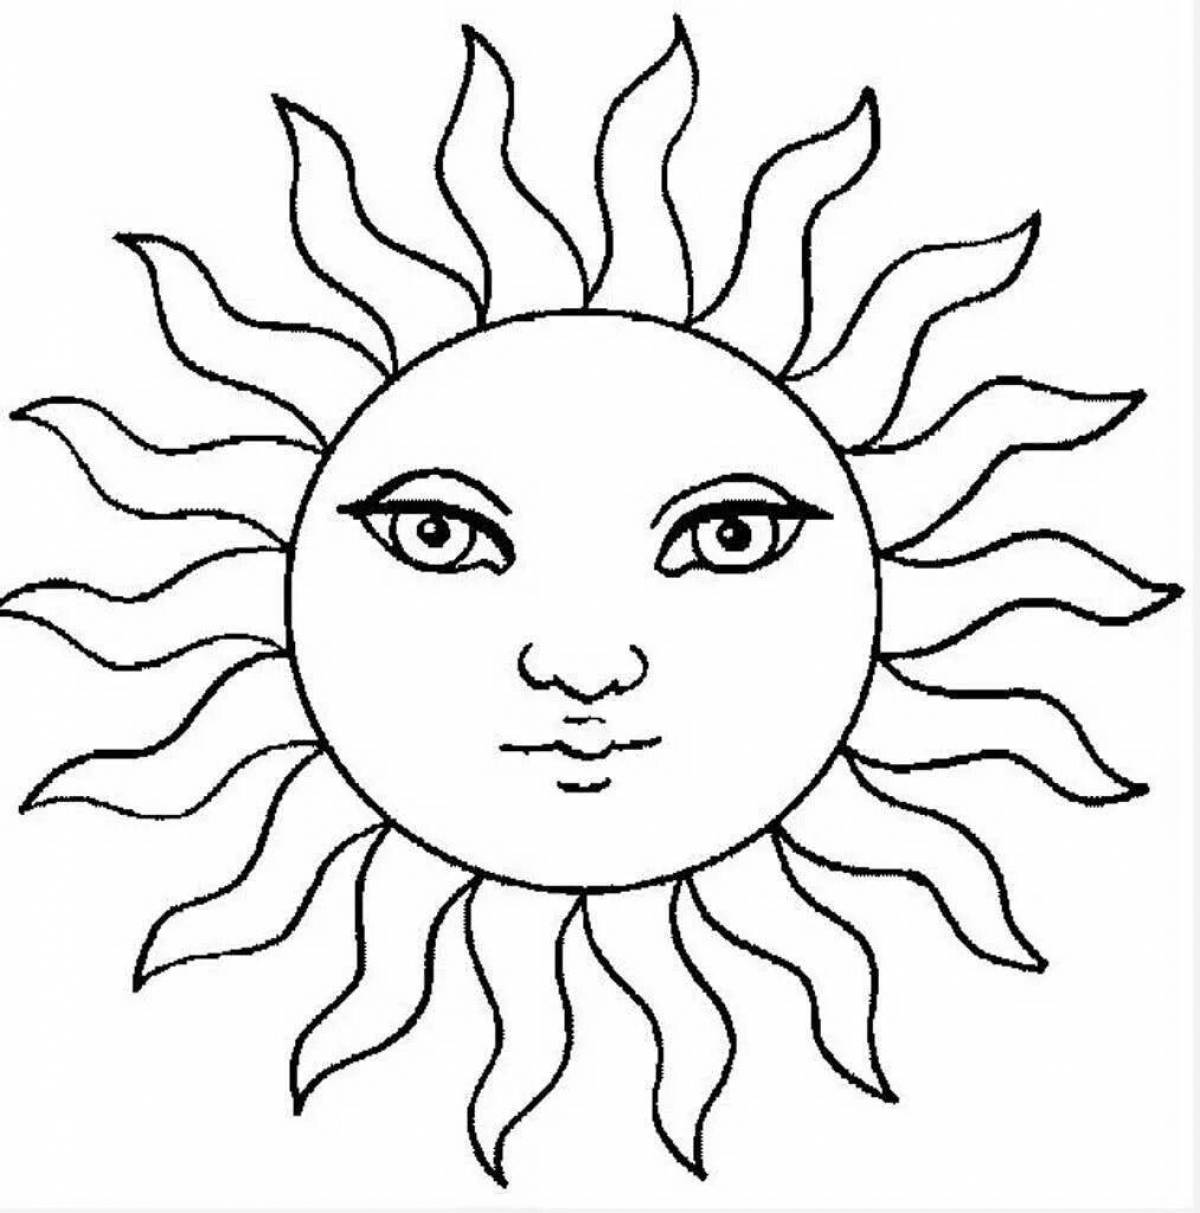 Great solar figure coloring book